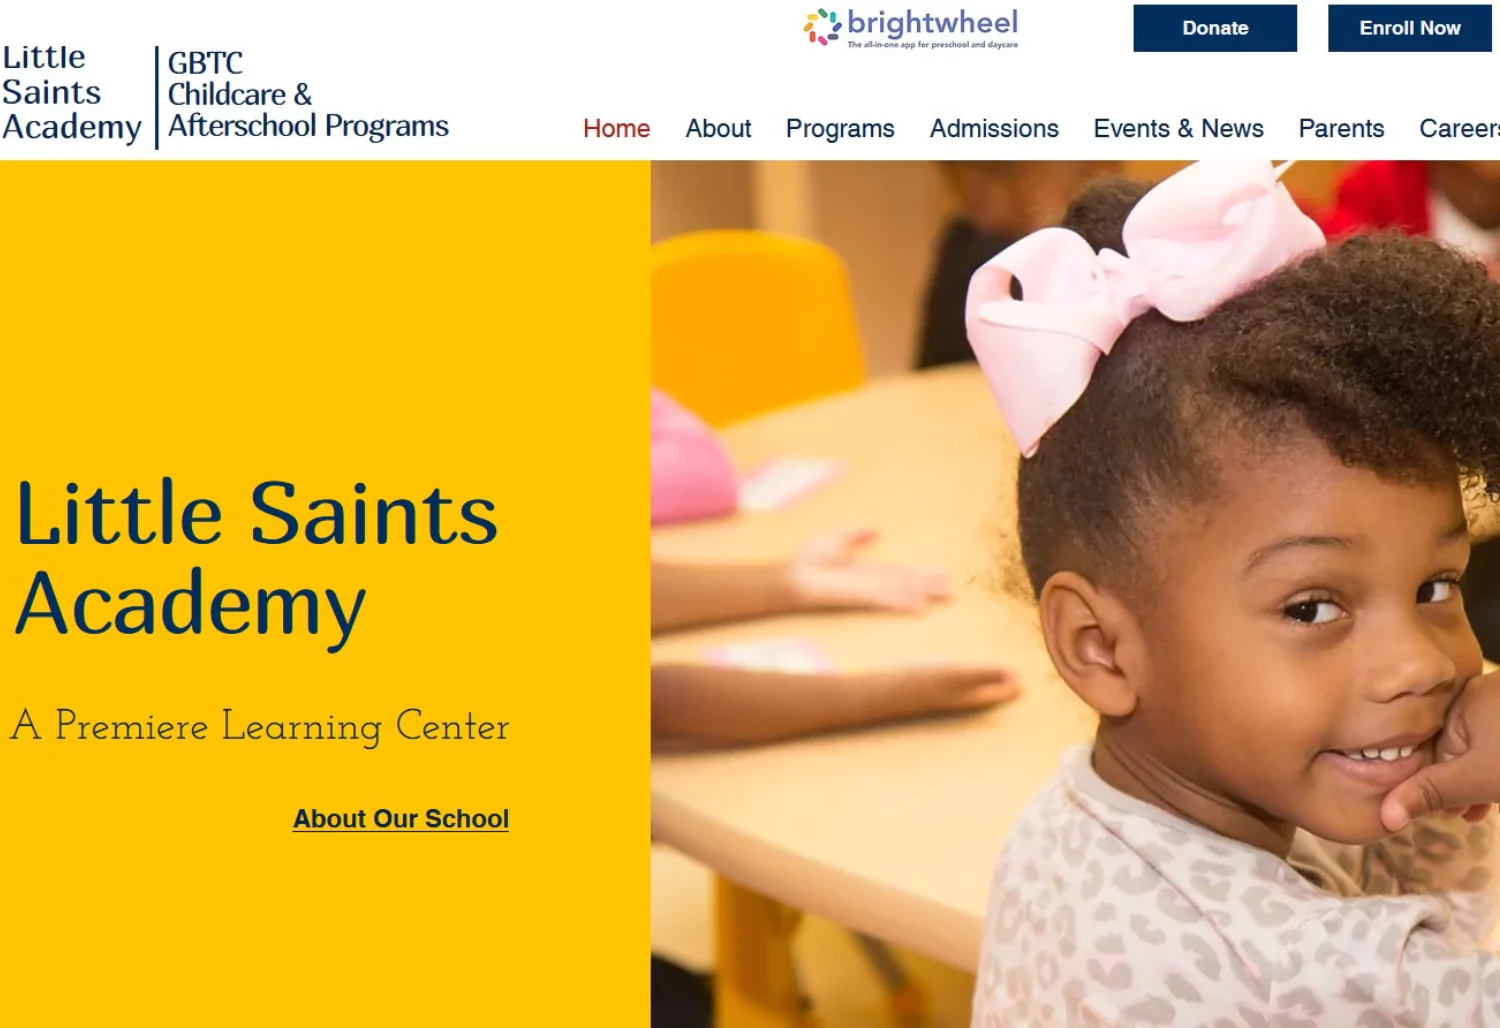 Little Saints Academy